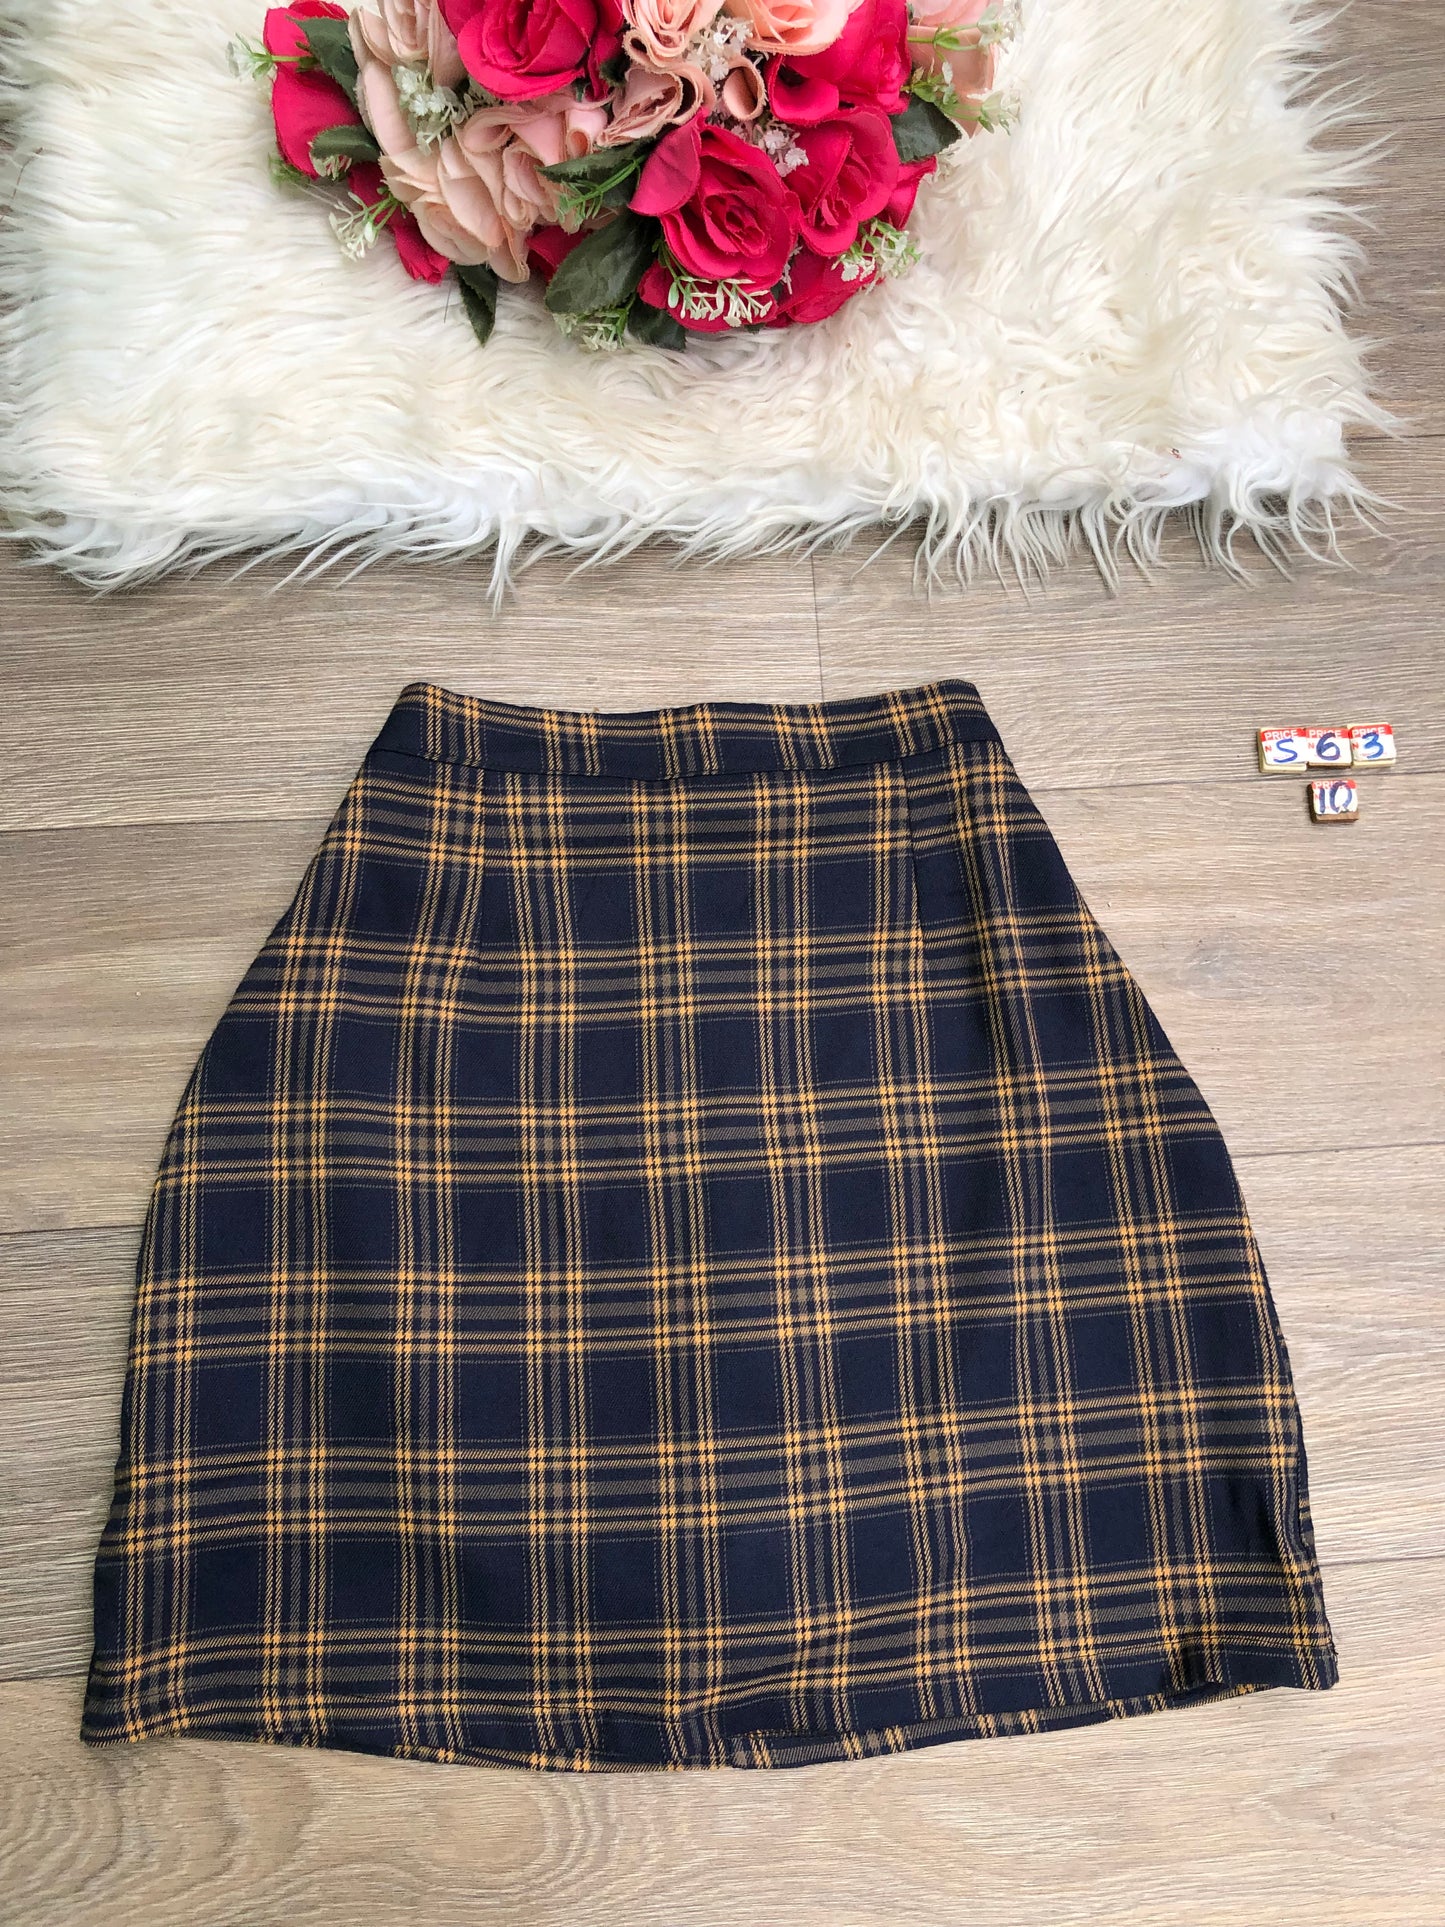 Skirt64 size 10